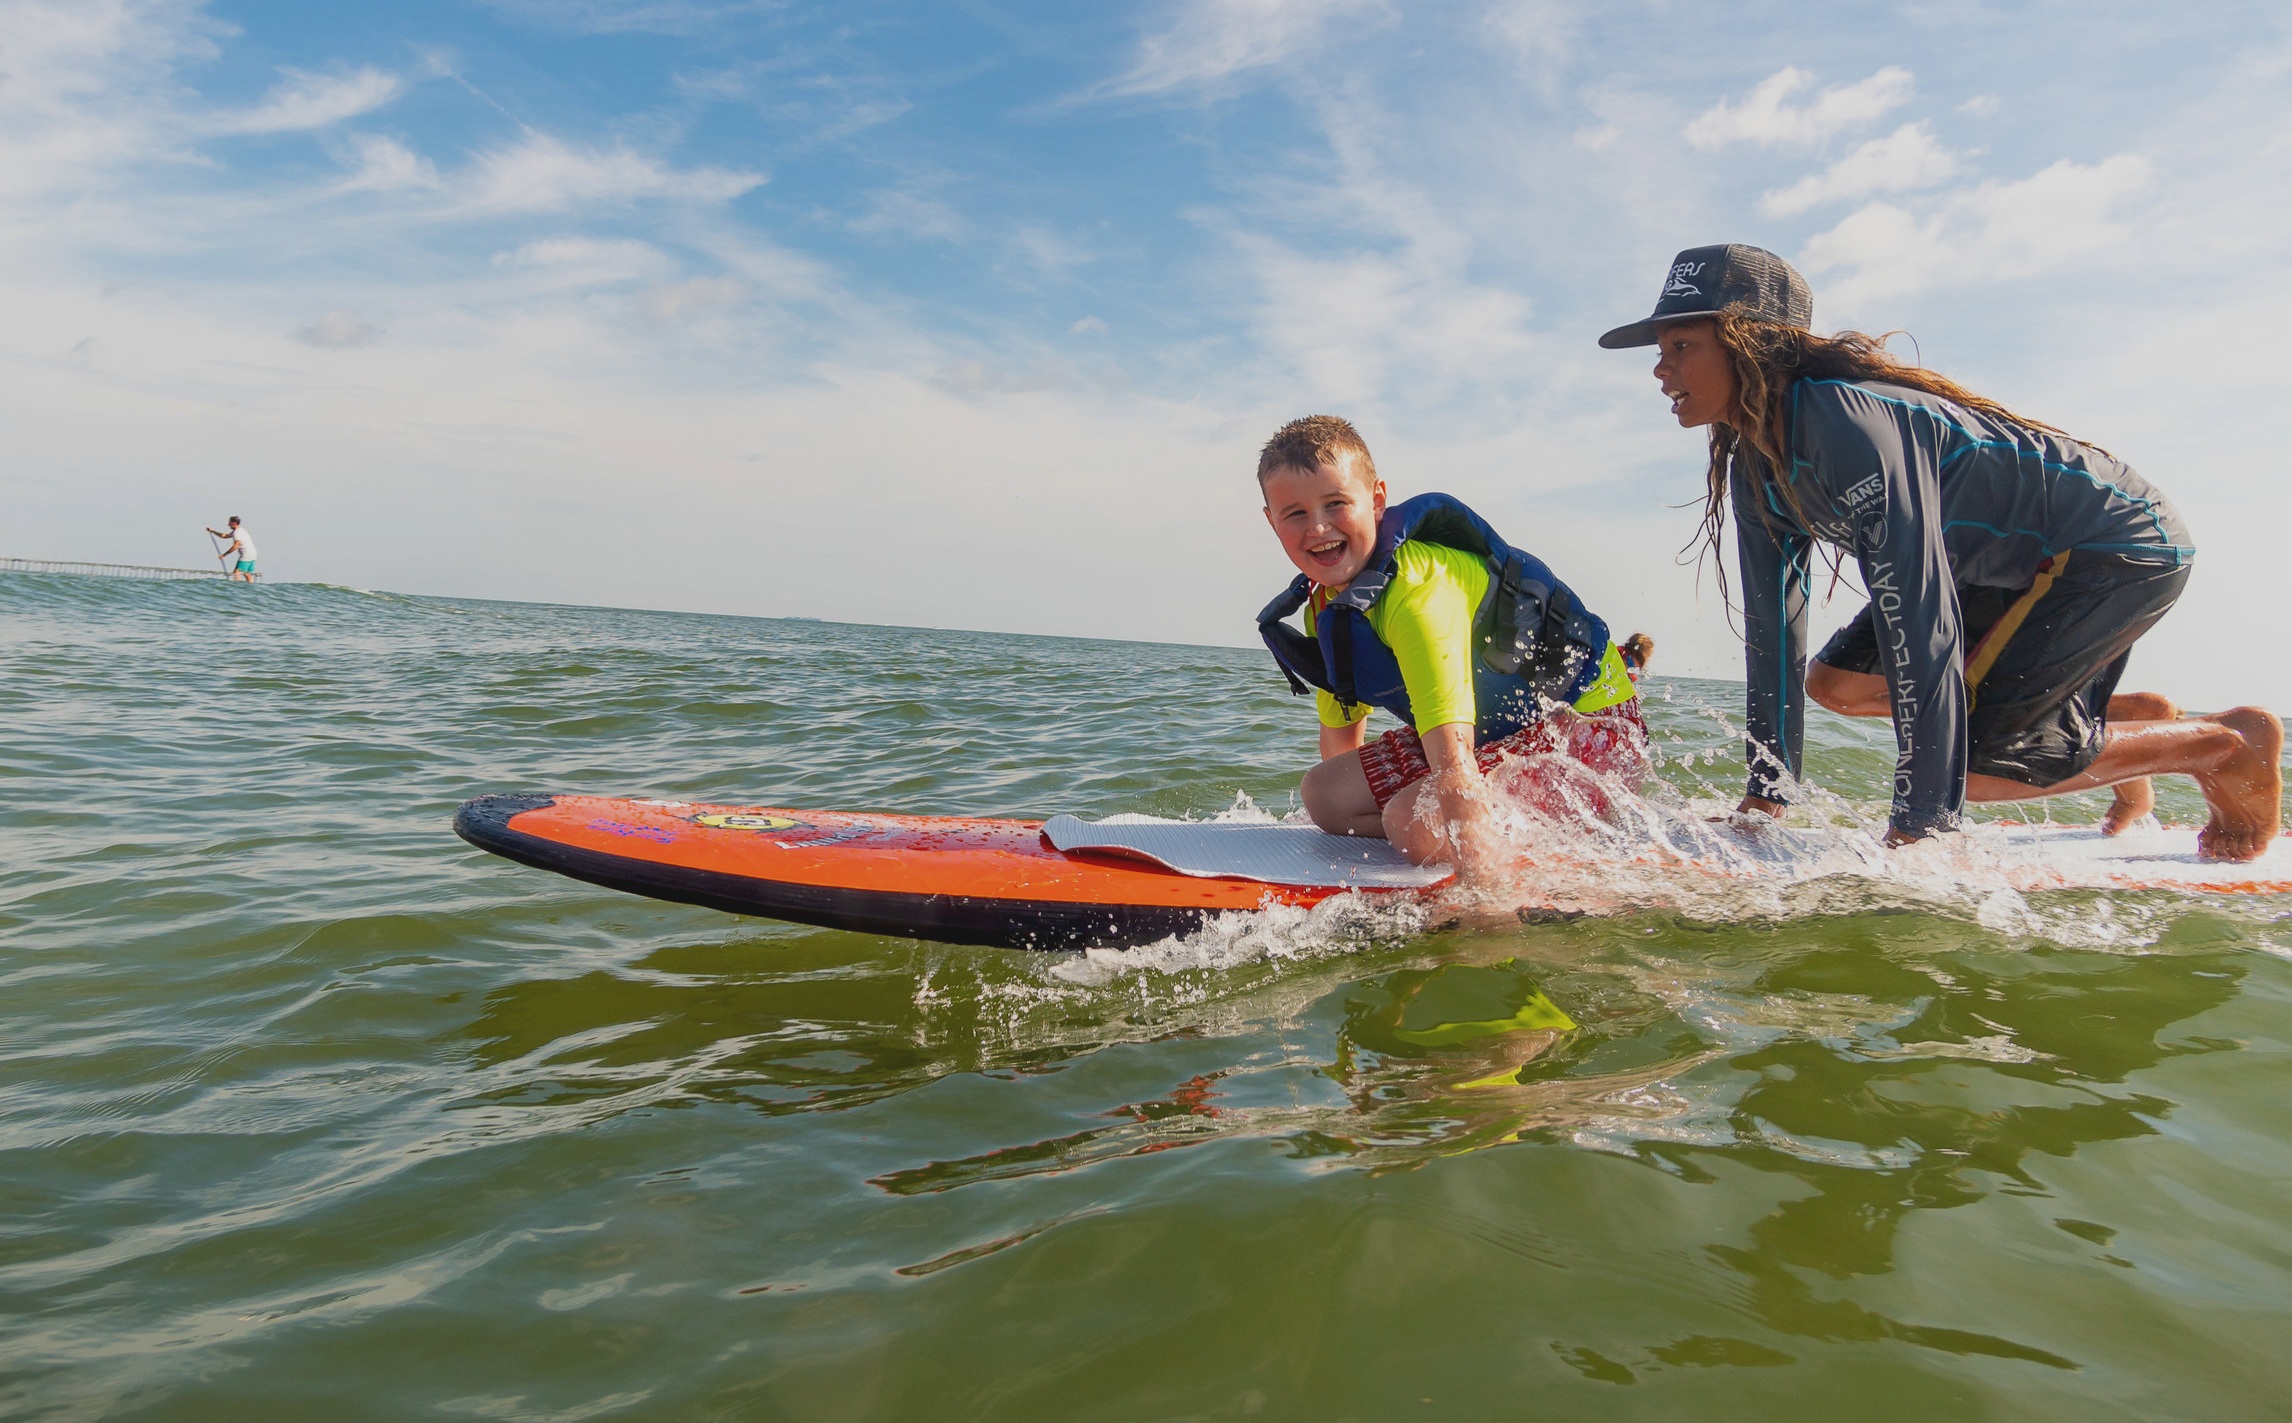 Surfers Healing Ocean City, Maryland